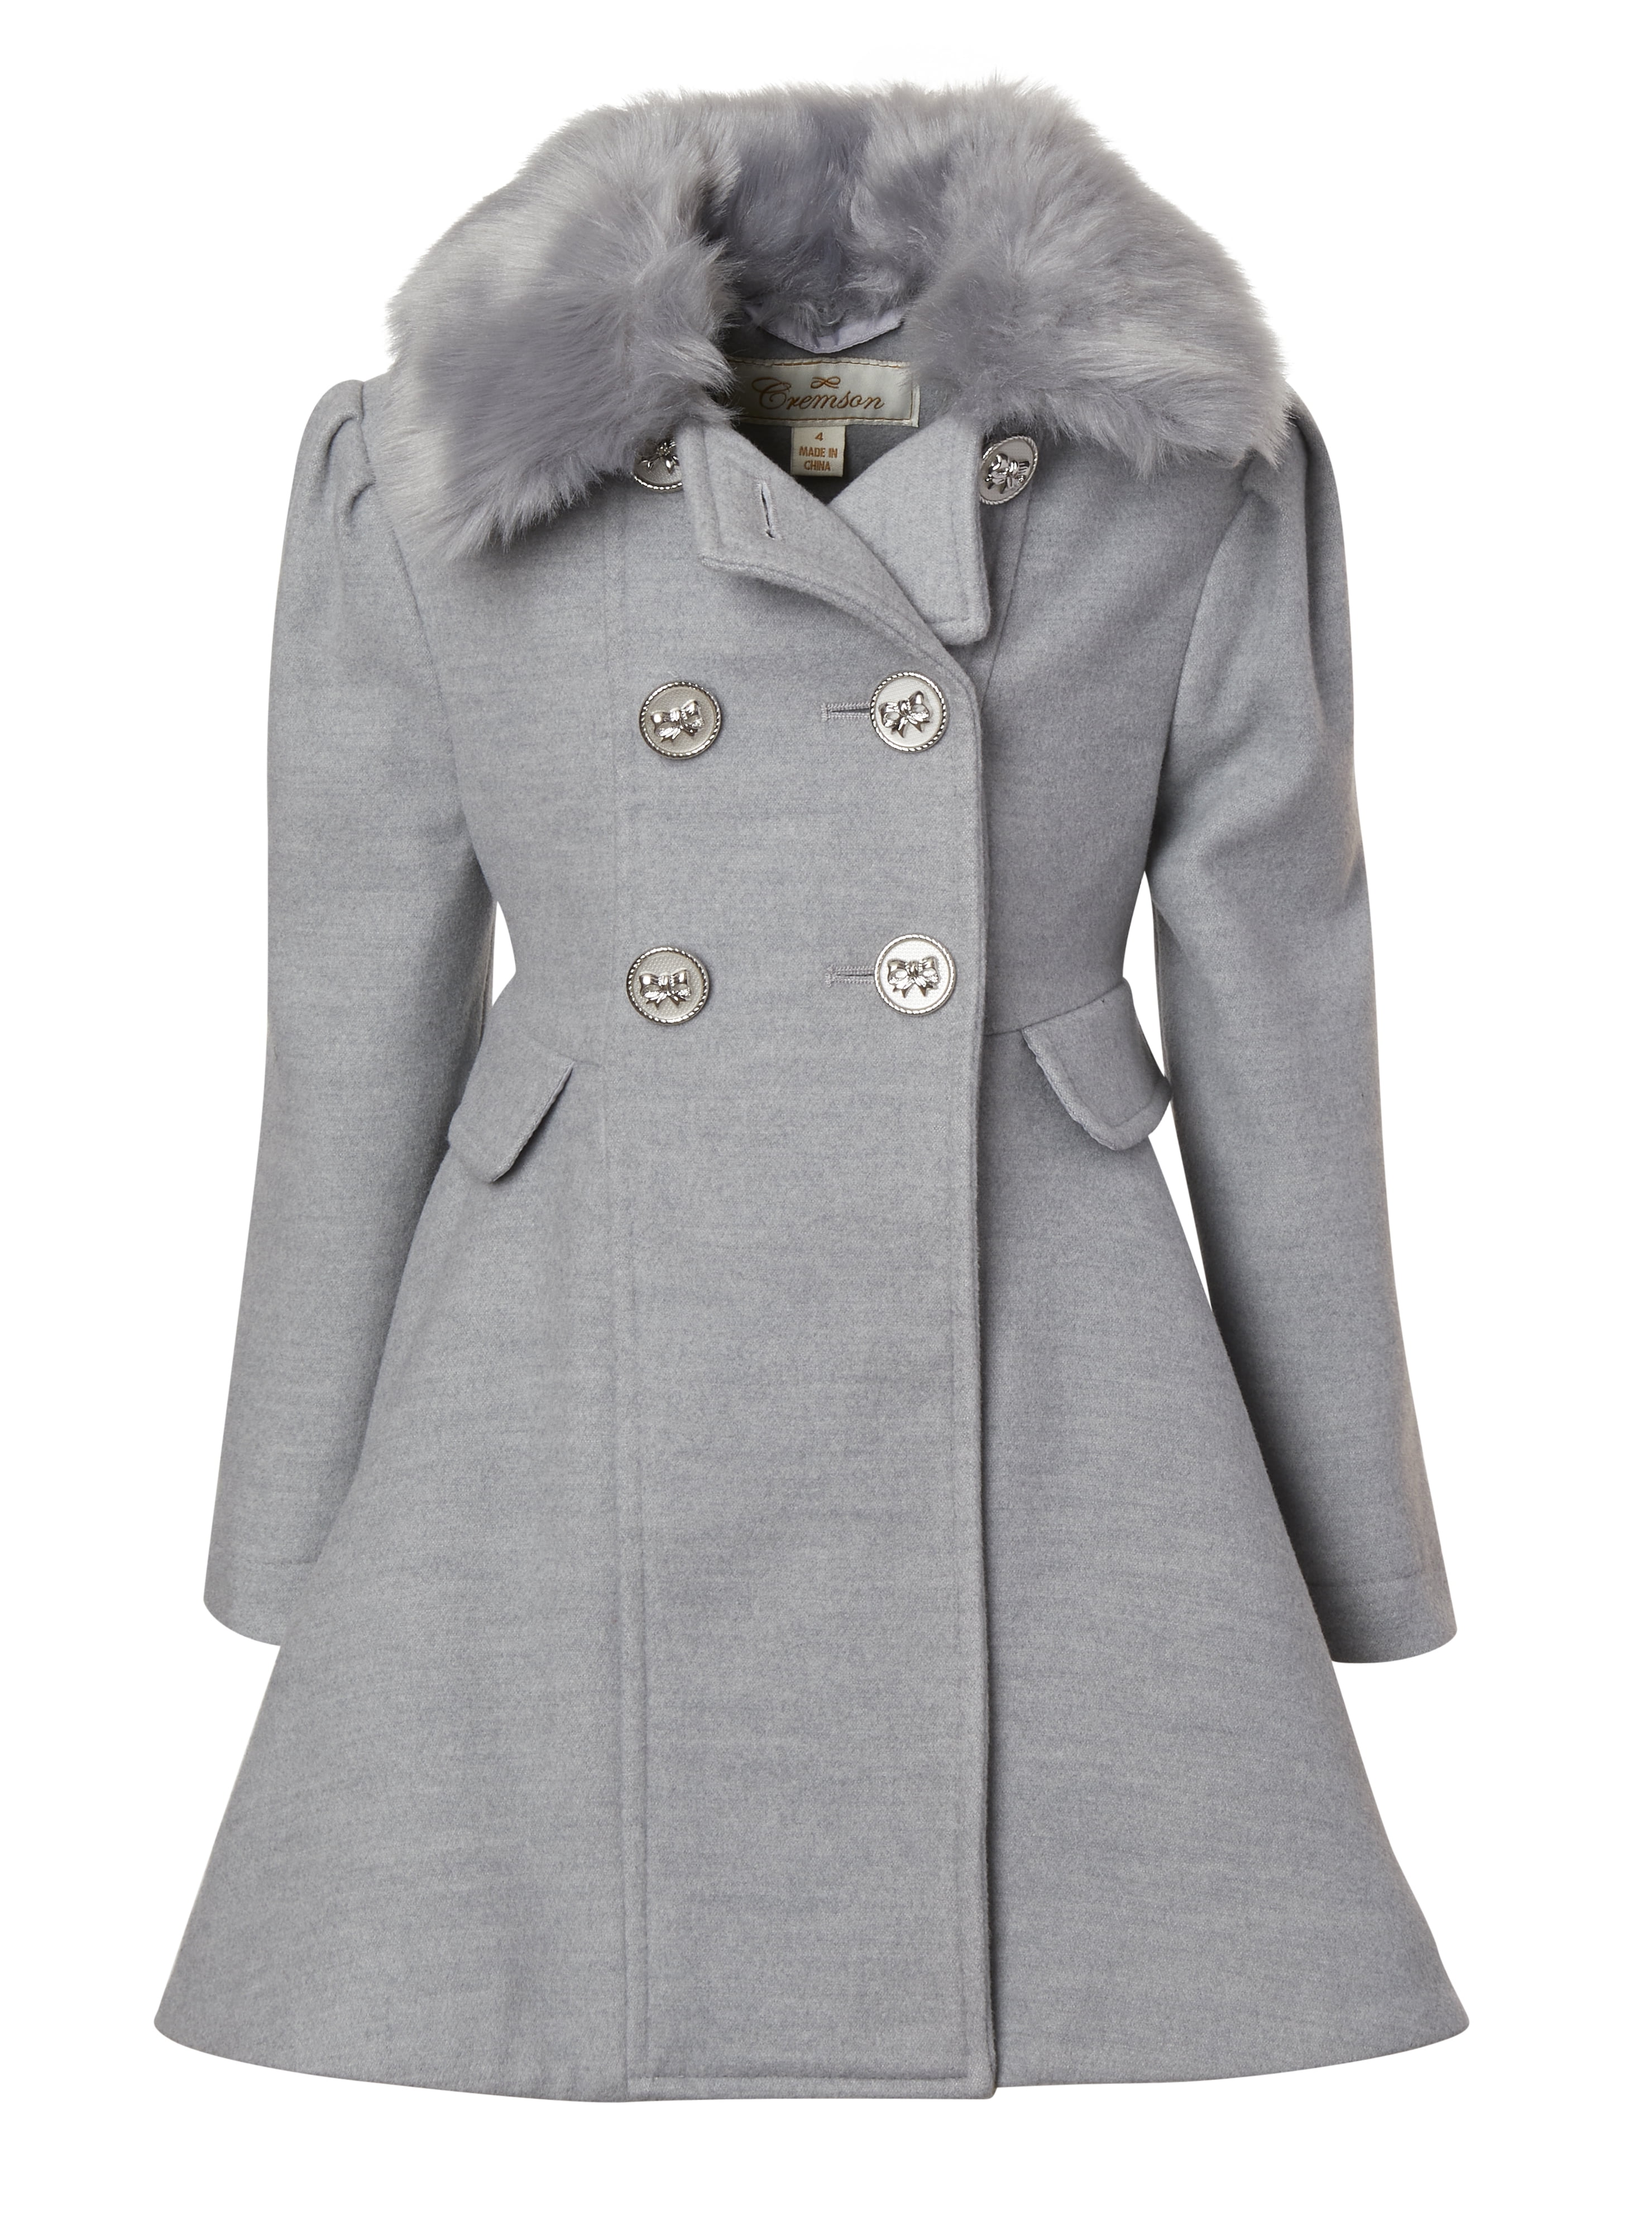 L SERVER Girls Peacoat,Girls Dress Coat Peacoat with Woolen Collar，Fashion Warm Blended Winter Coat Princess Bow Jacket 